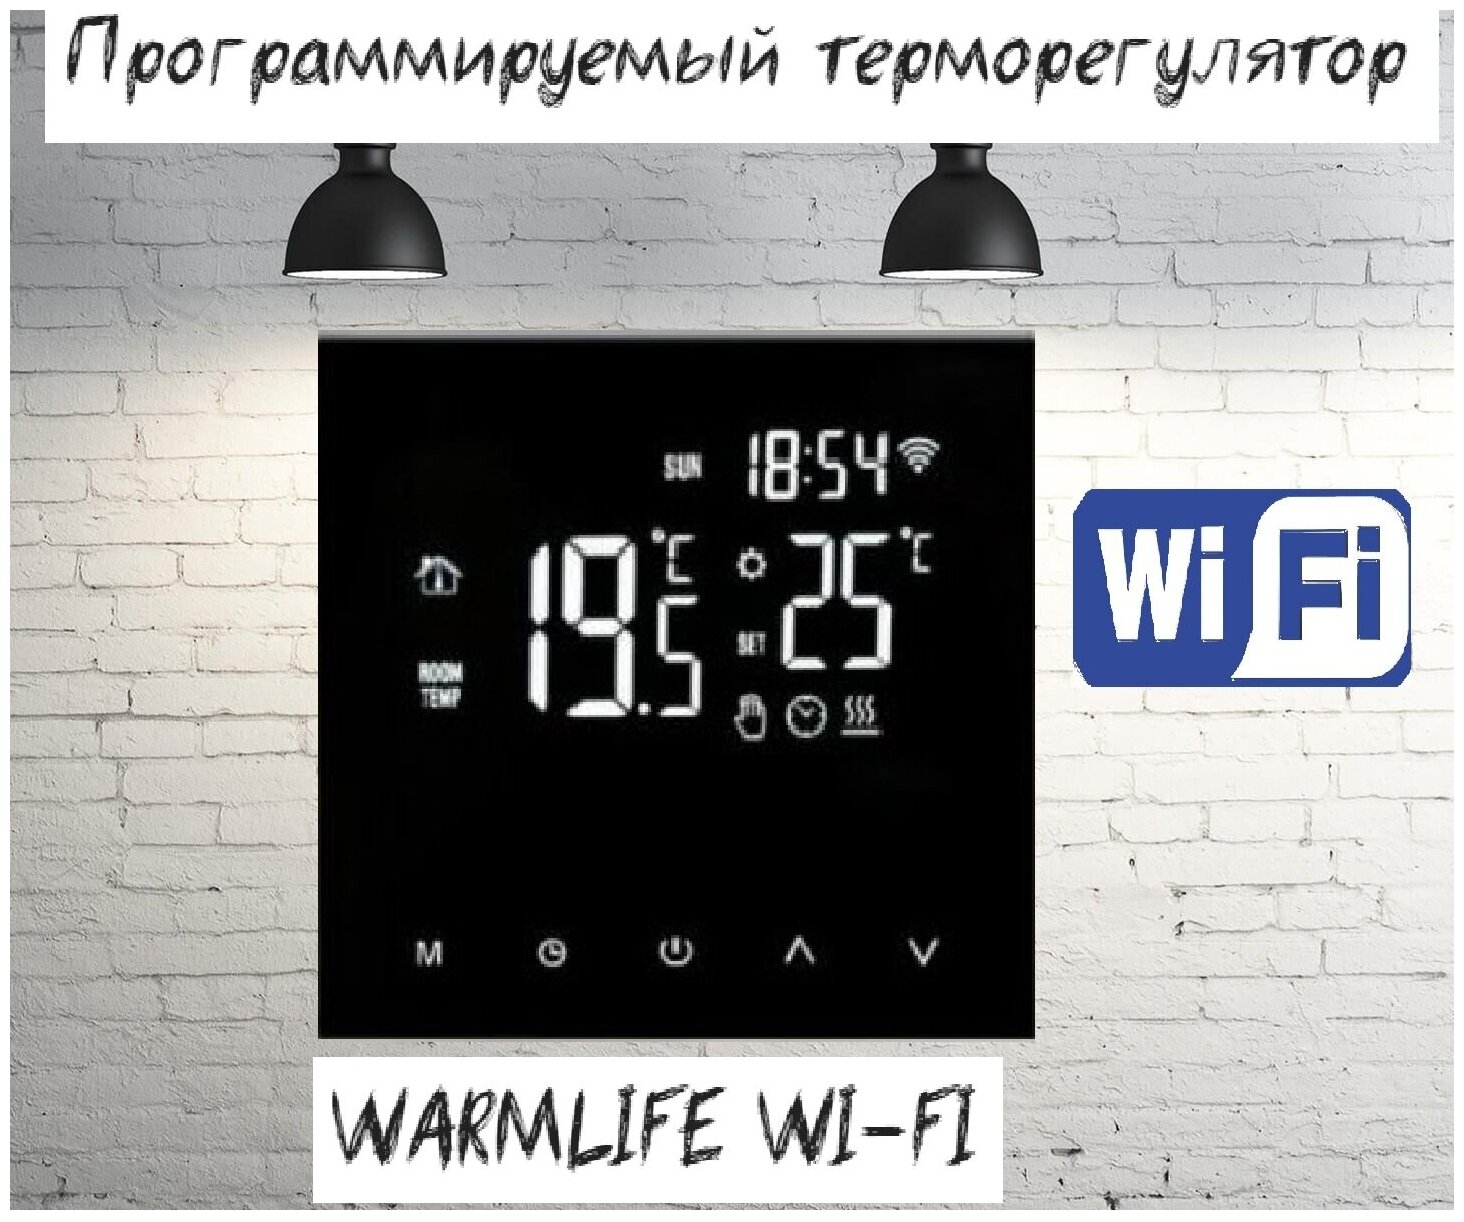 Терморегулятор программируемый WARMLIFE HT17H3 WI-FI